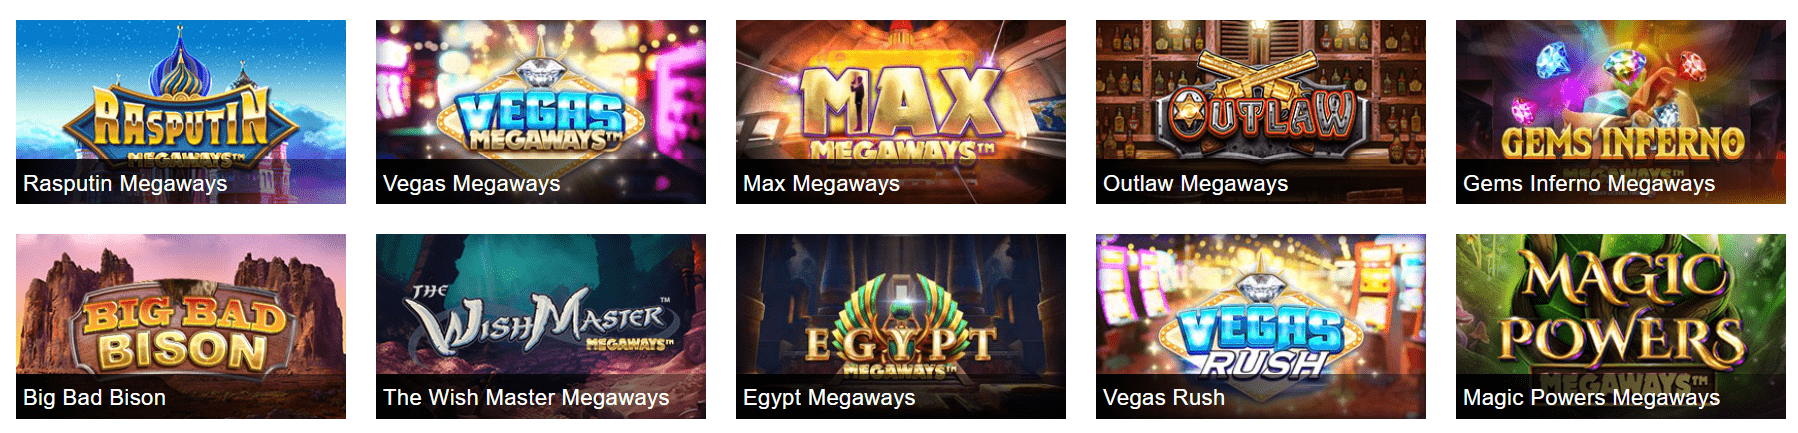 spreadex casino megaways slots